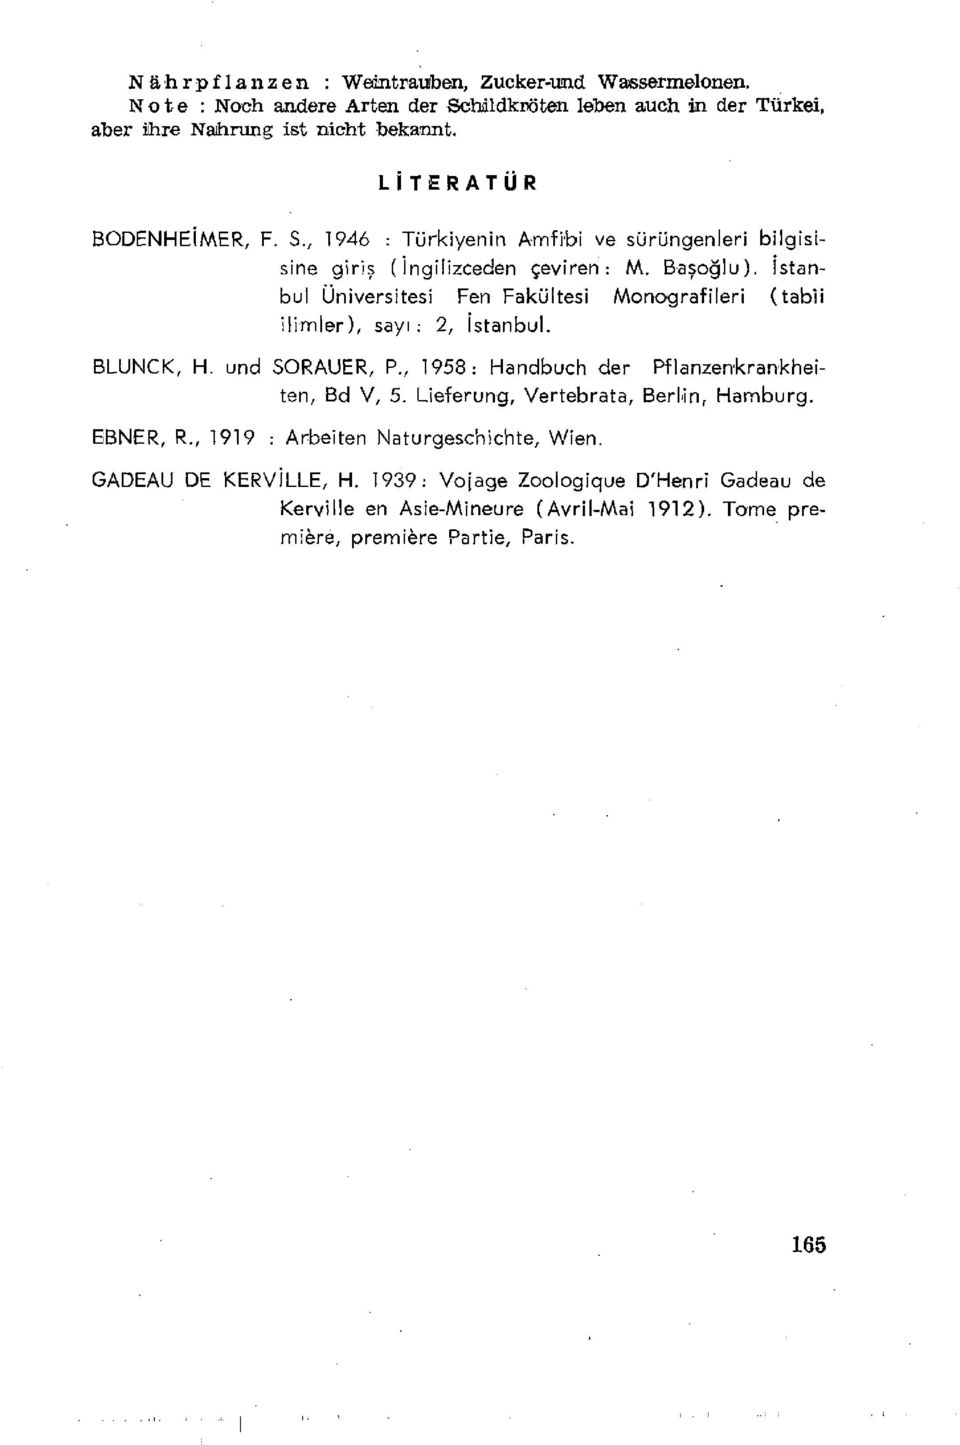 İstanbul Üniversitesi Fen Fakültesi Monografileri (tabii ilimler), sayı: 2, İstanbul. BLUNCK, H. und SORAUER, P., 1958: Handbuch der Pflanzenkrankheiten, Bd V, 5.